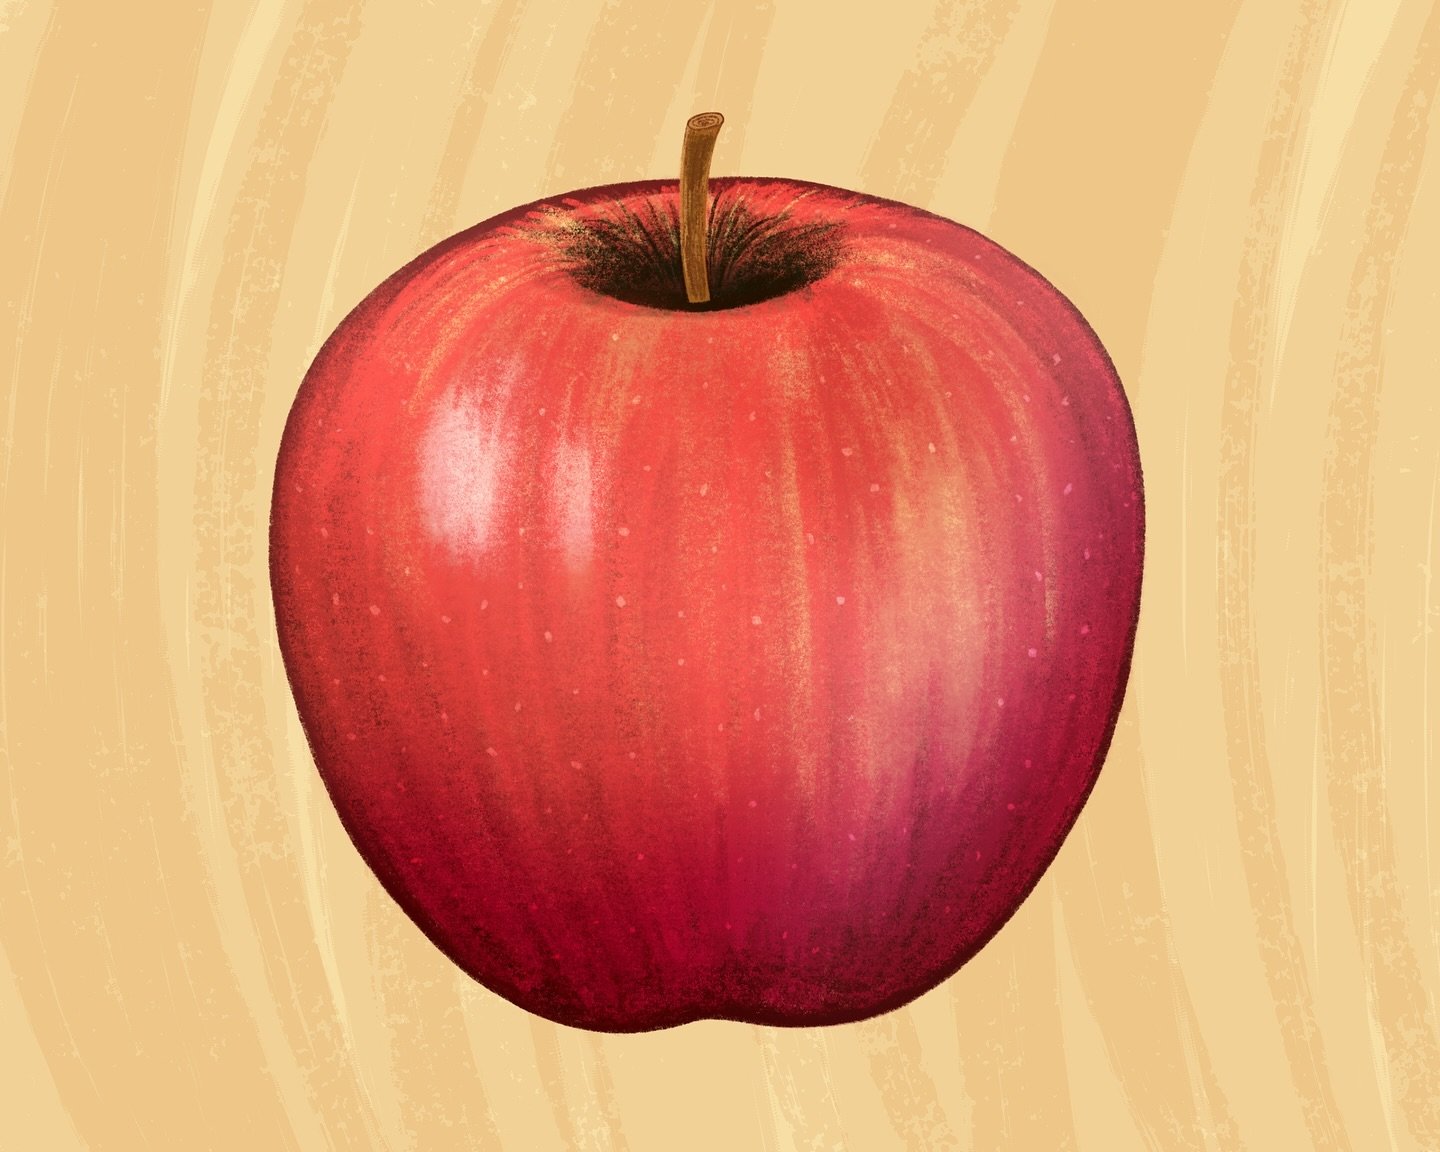 Take a bite! 🍎

#apple #illustration #digitalillustration #procreate